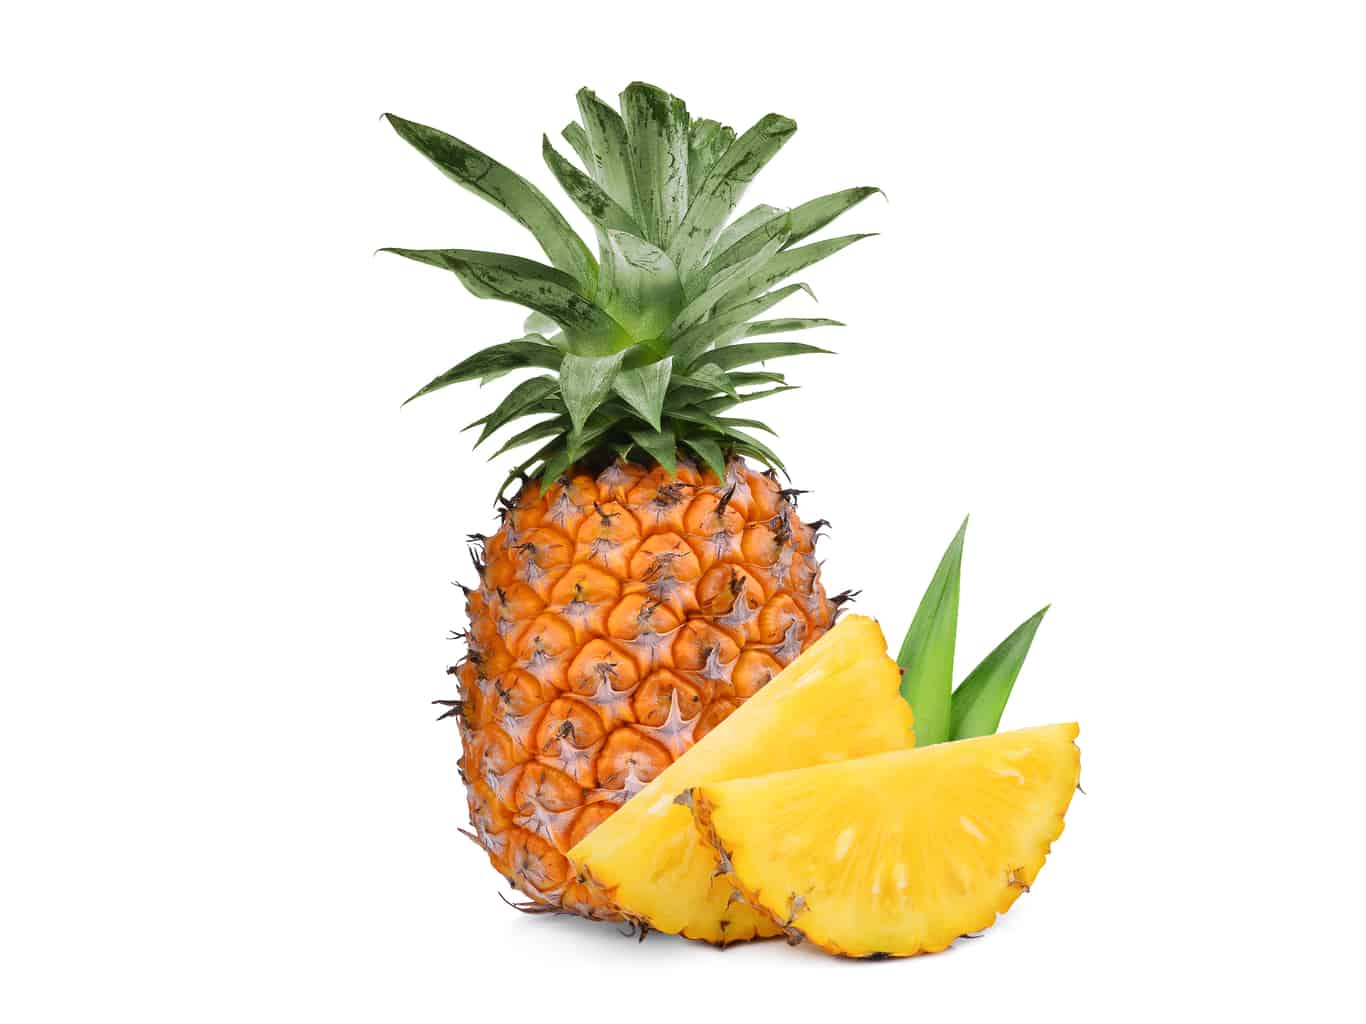 New pineapple-based supplement “lengthens lifespan”